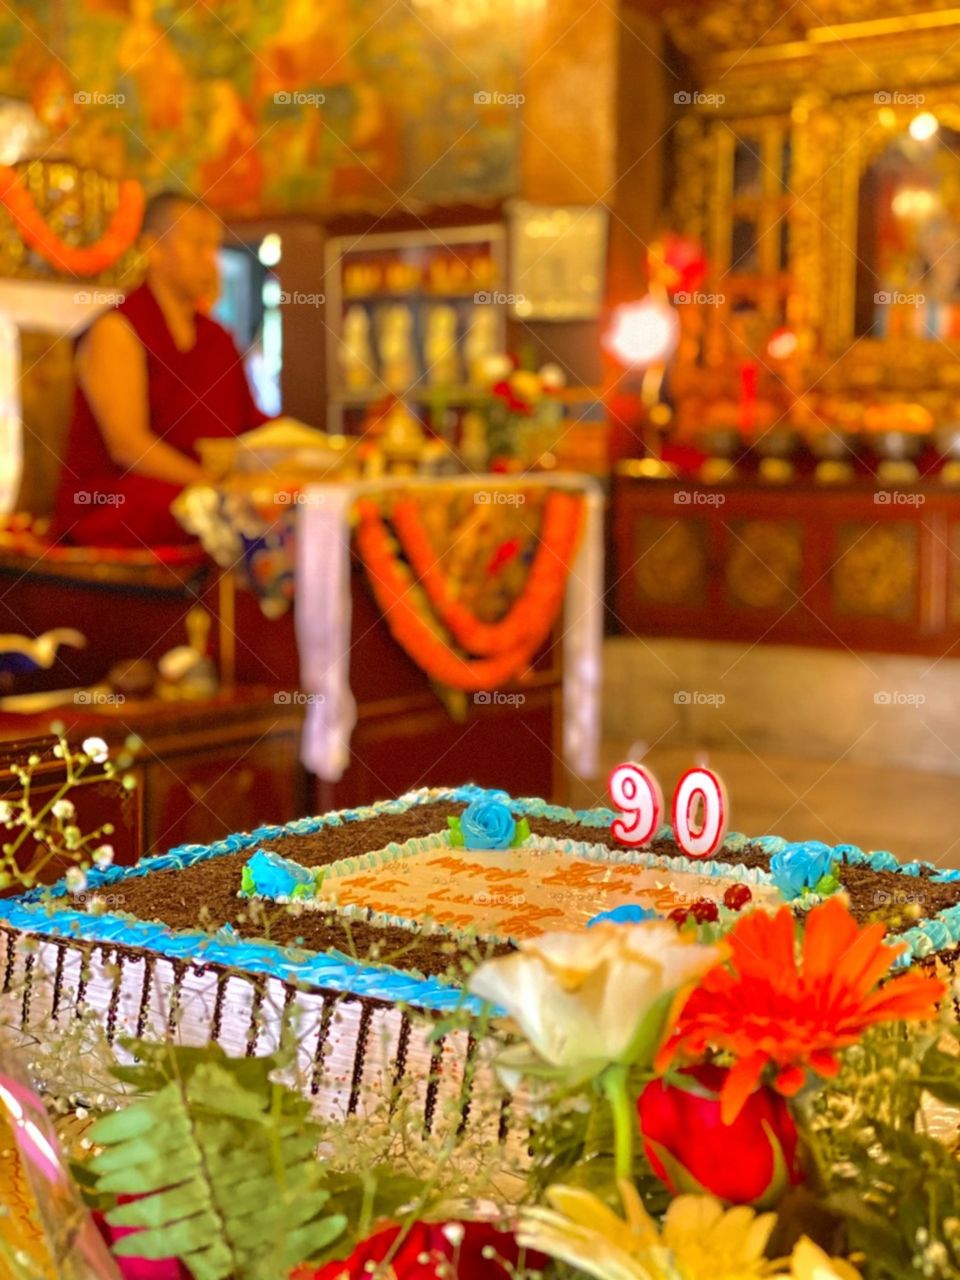 A guru Birthday Cake